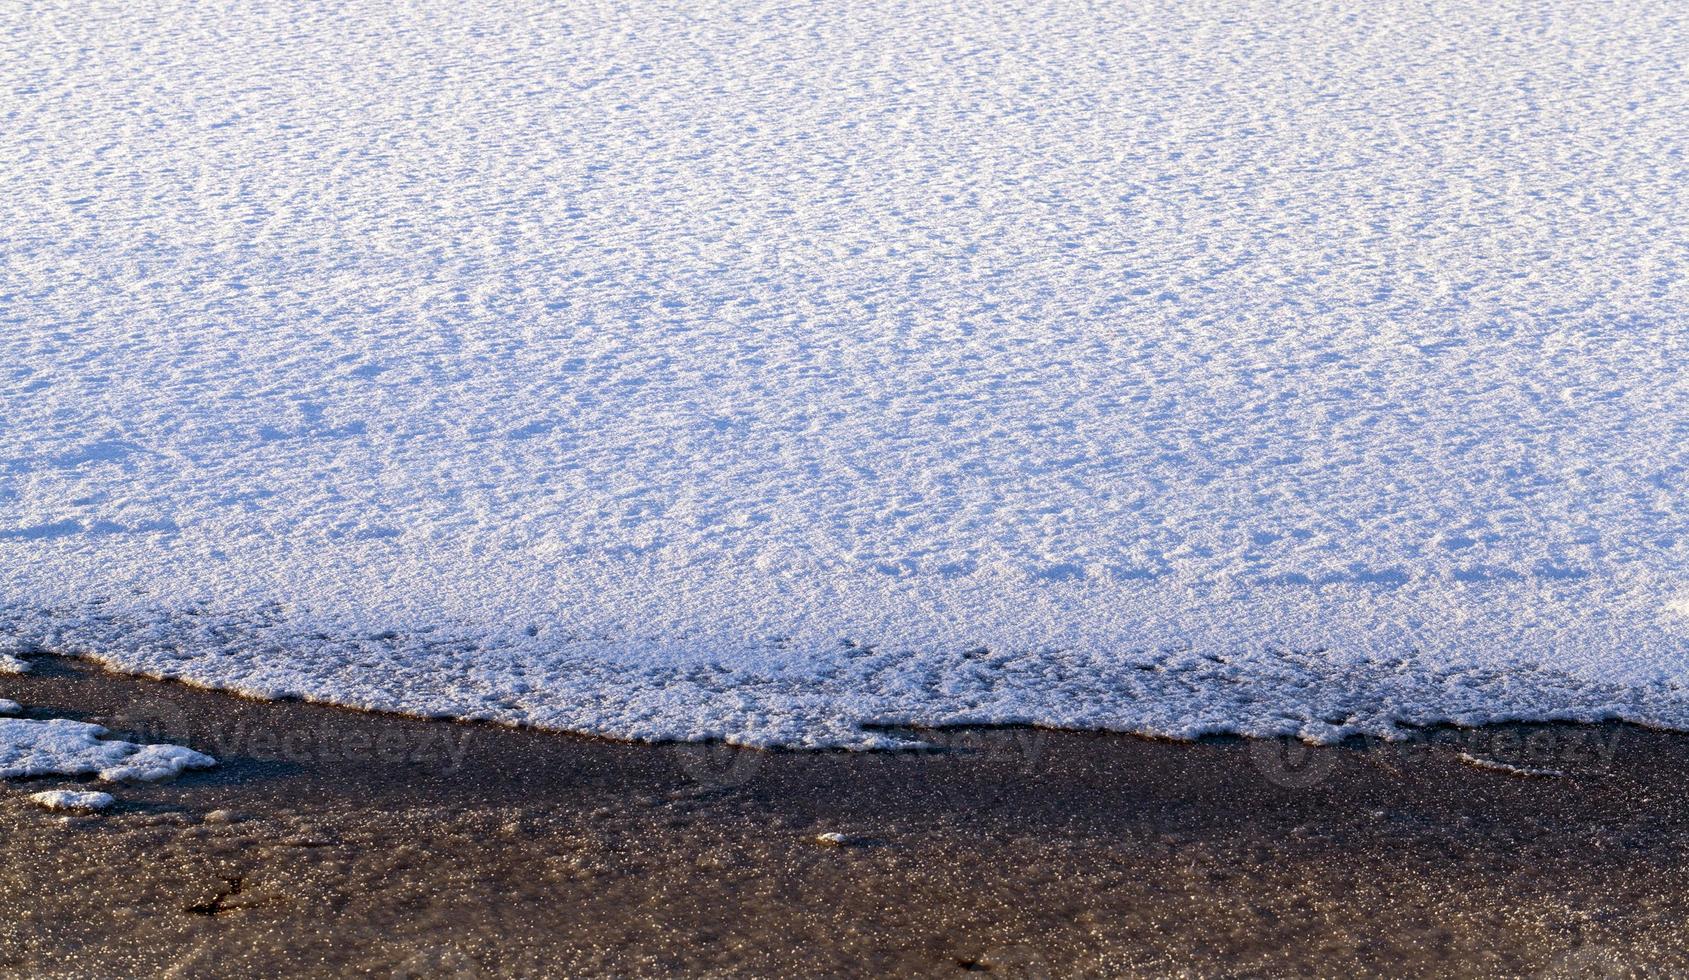 lago congelado, primer plano foto